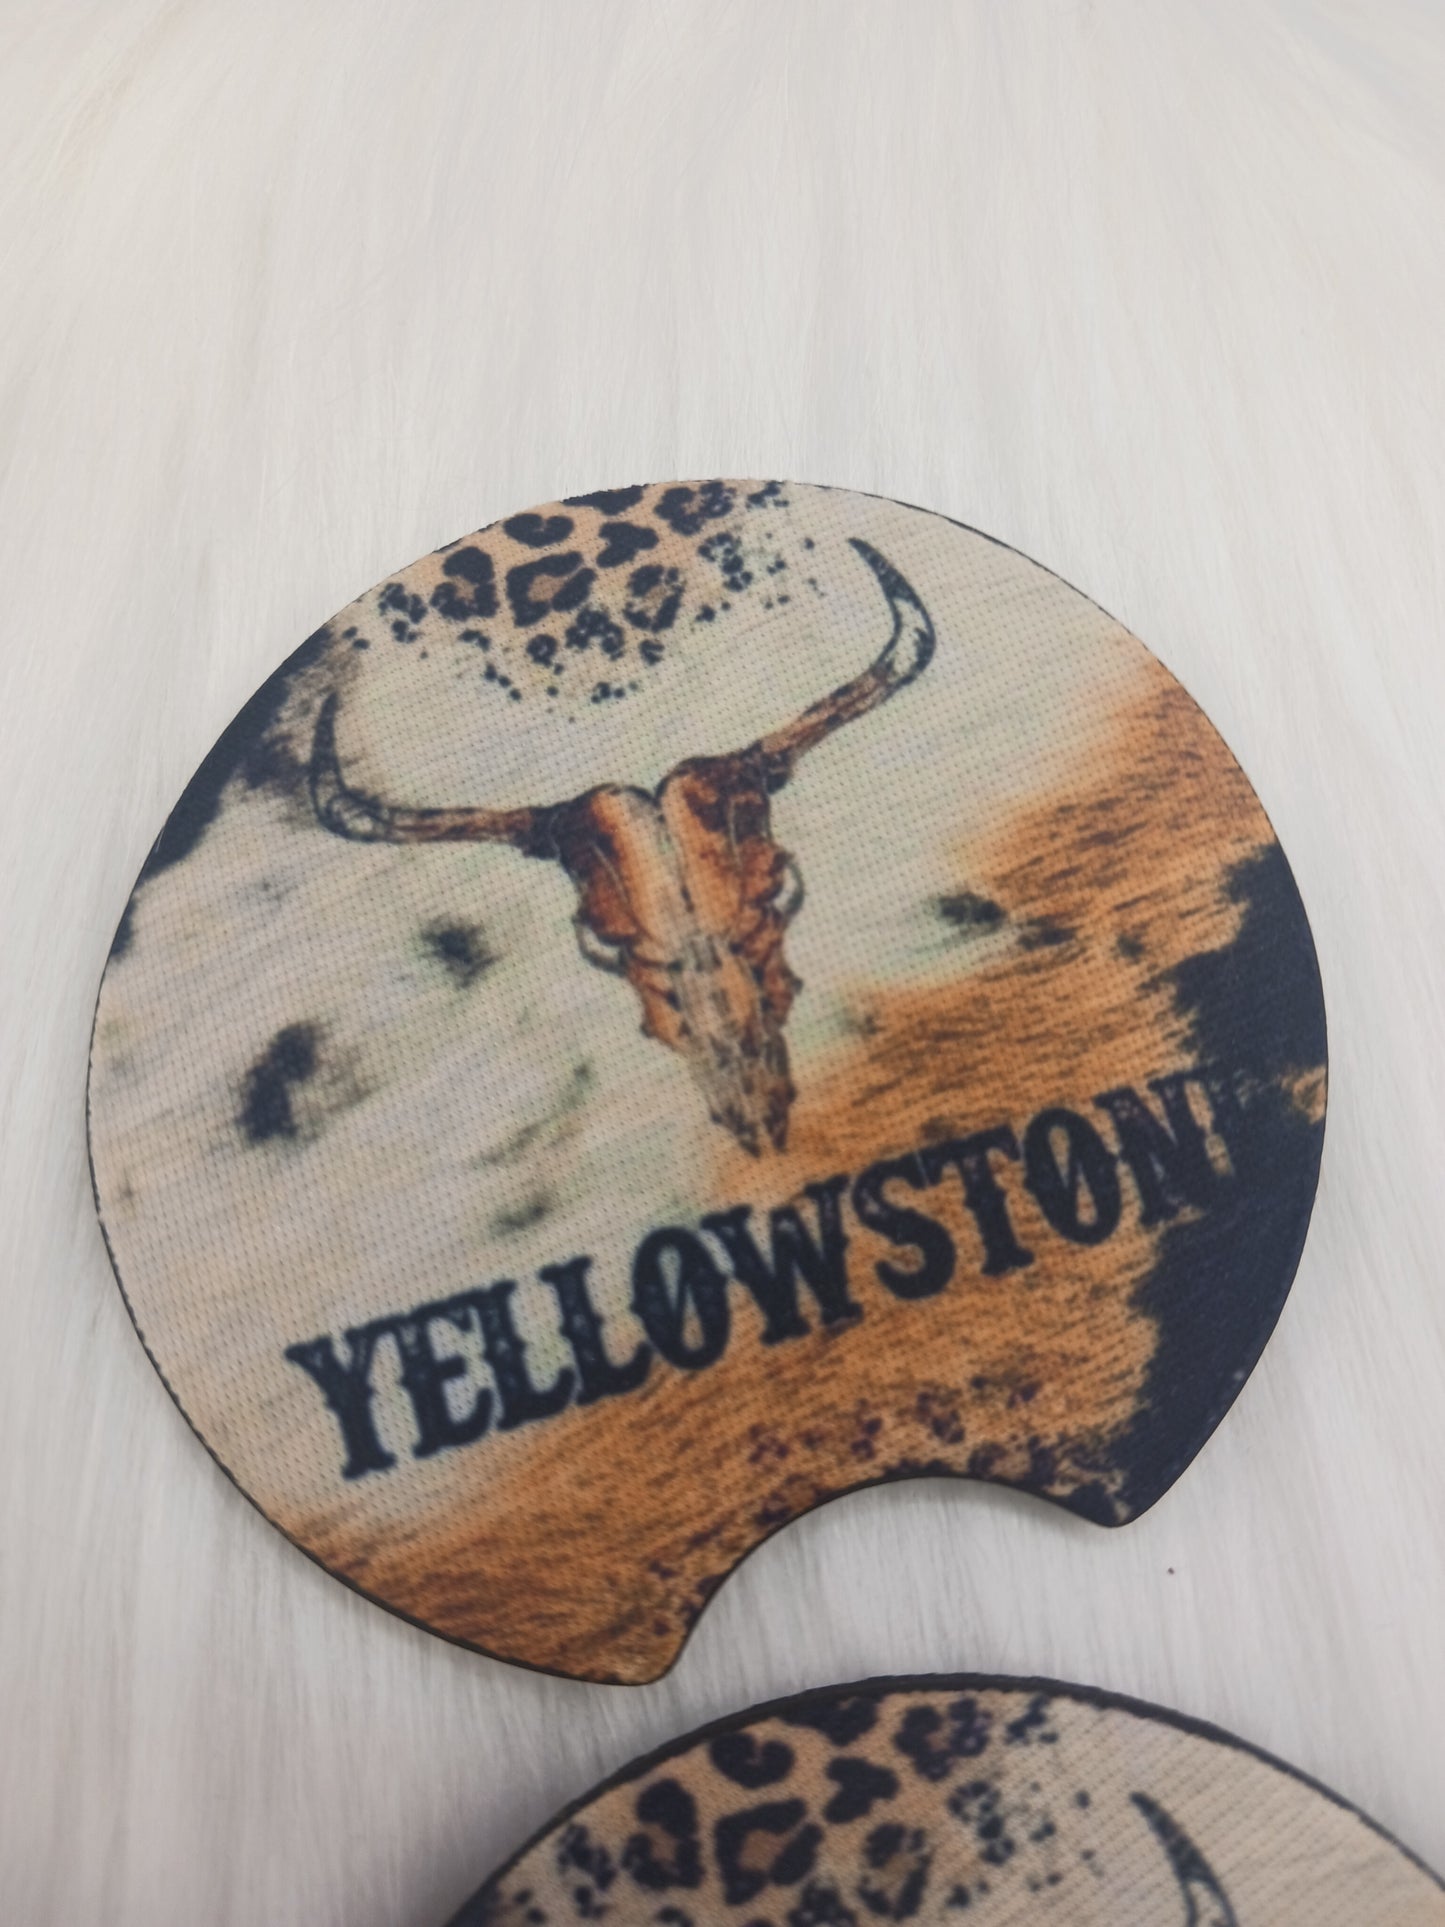 Bull cow stone yellow TV show car coasters